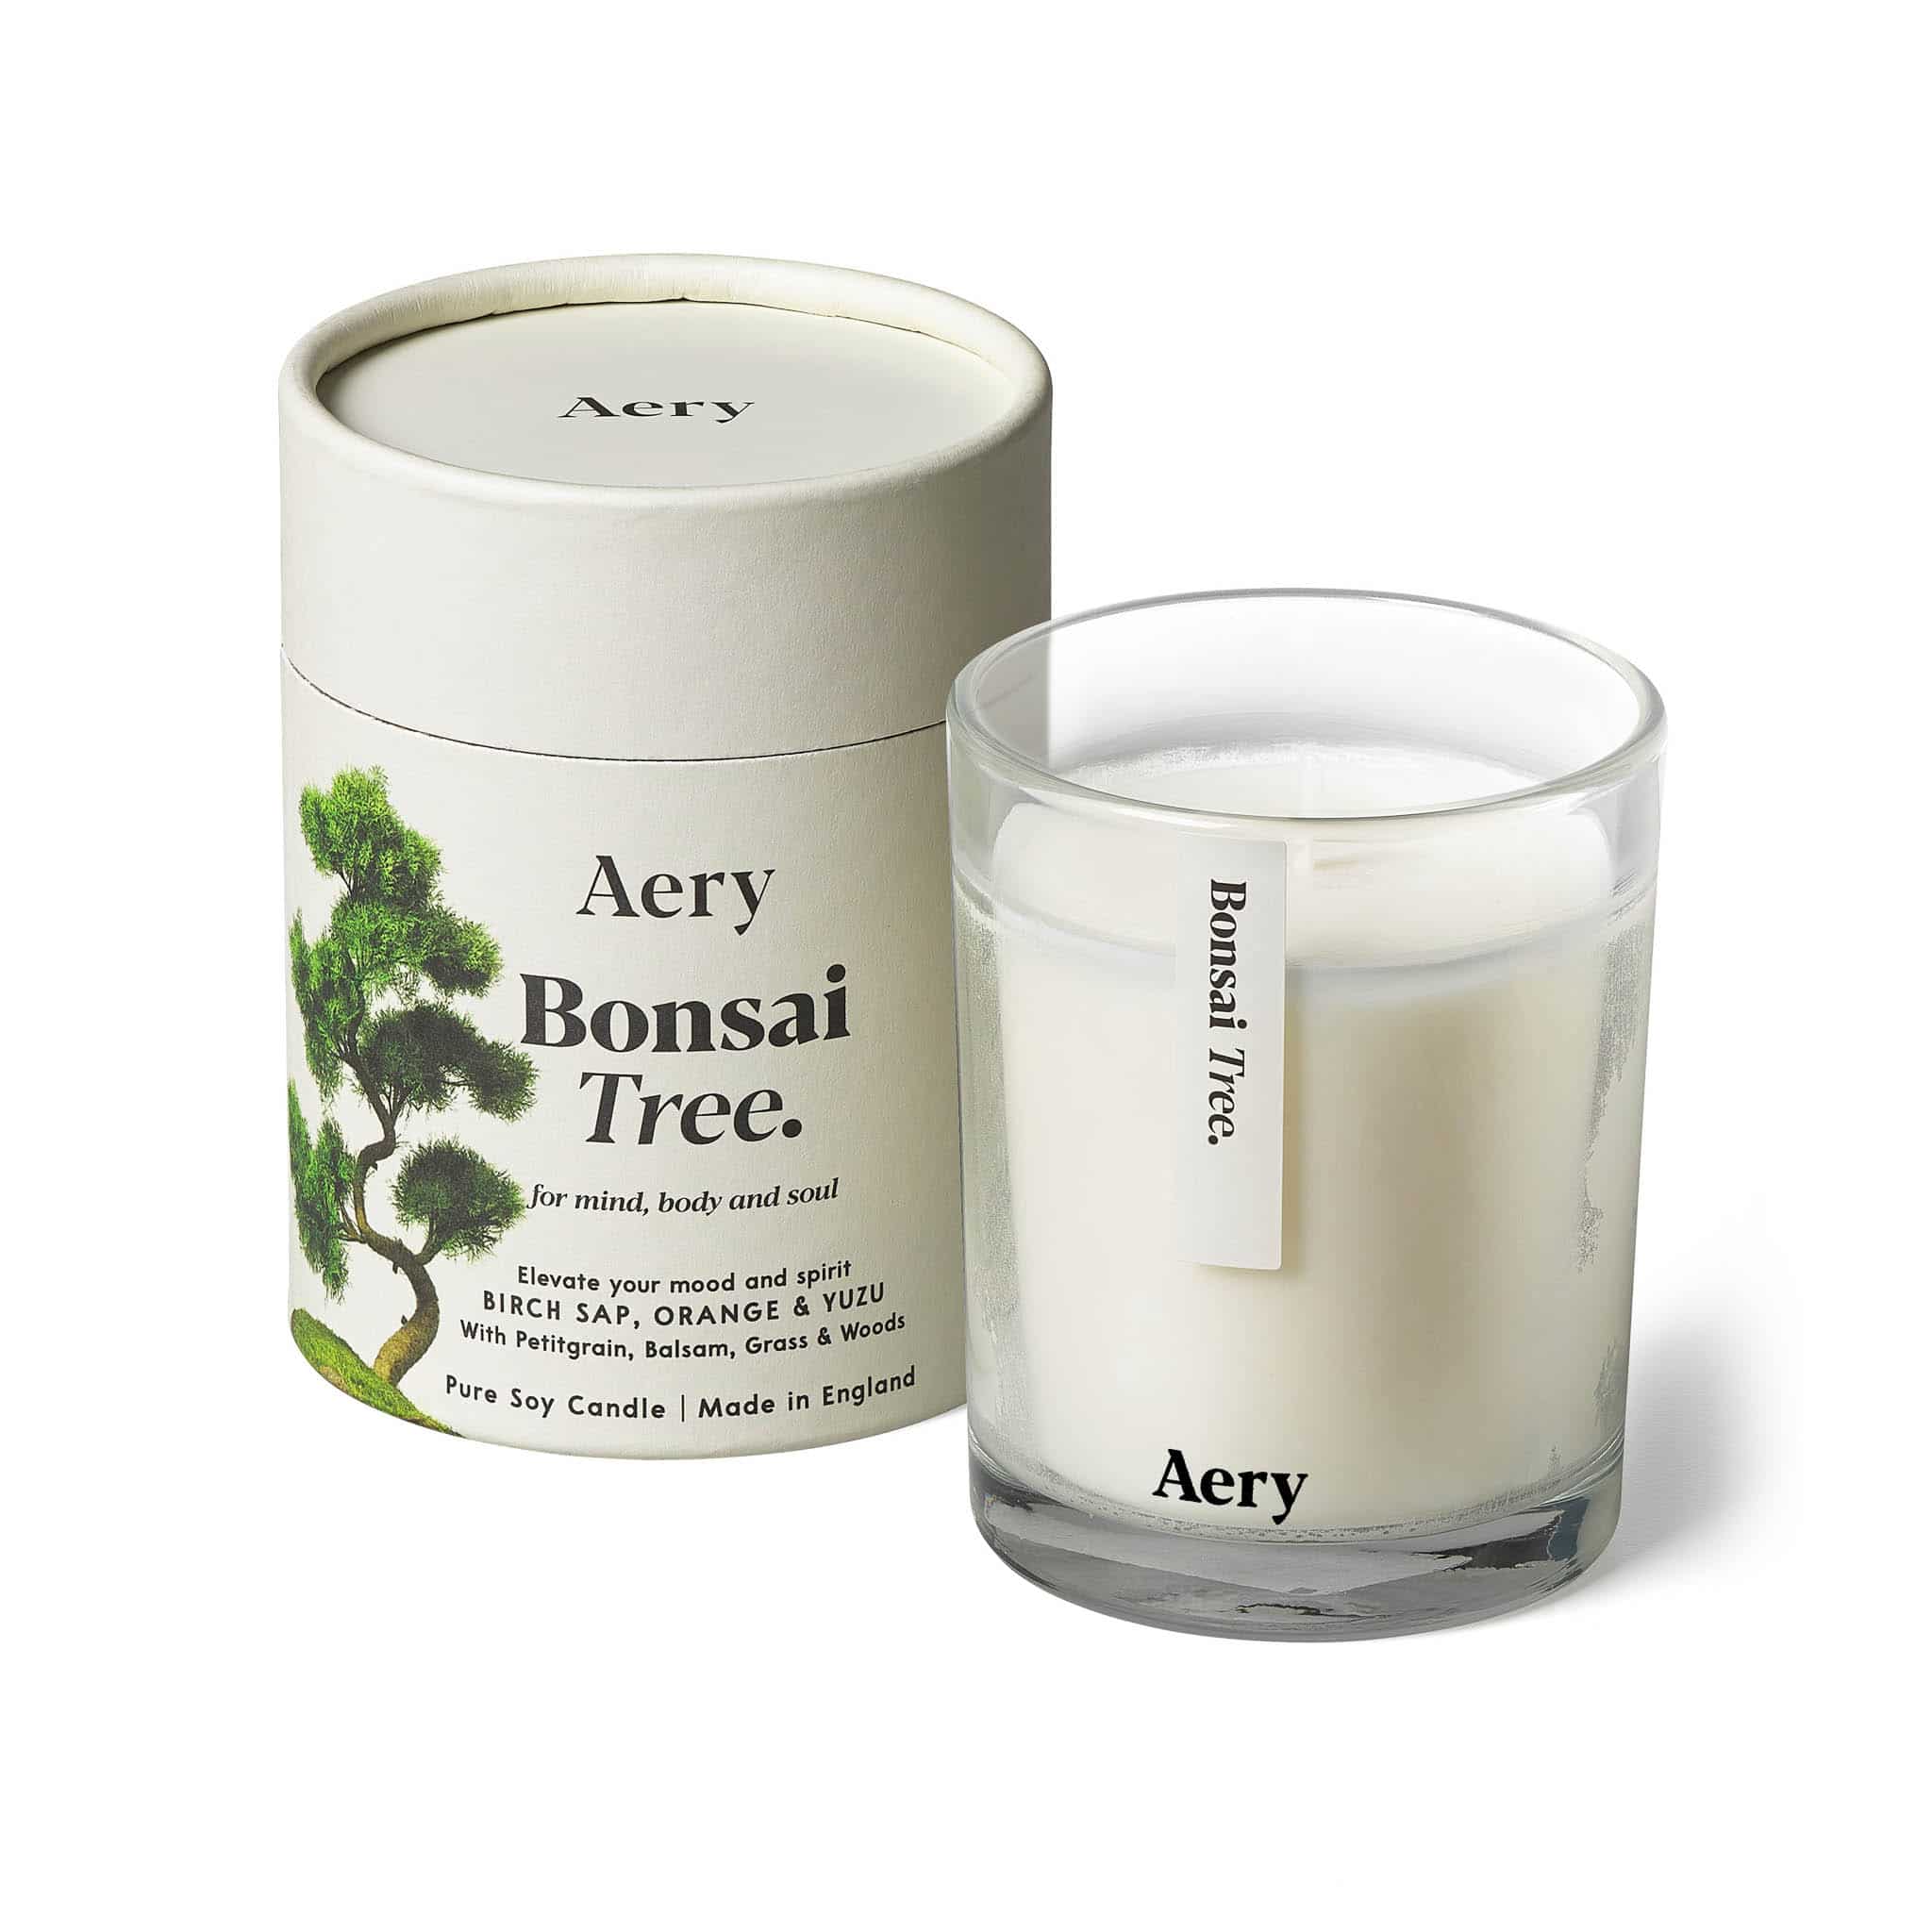 Aery Bonsai Tree Candle, 200g